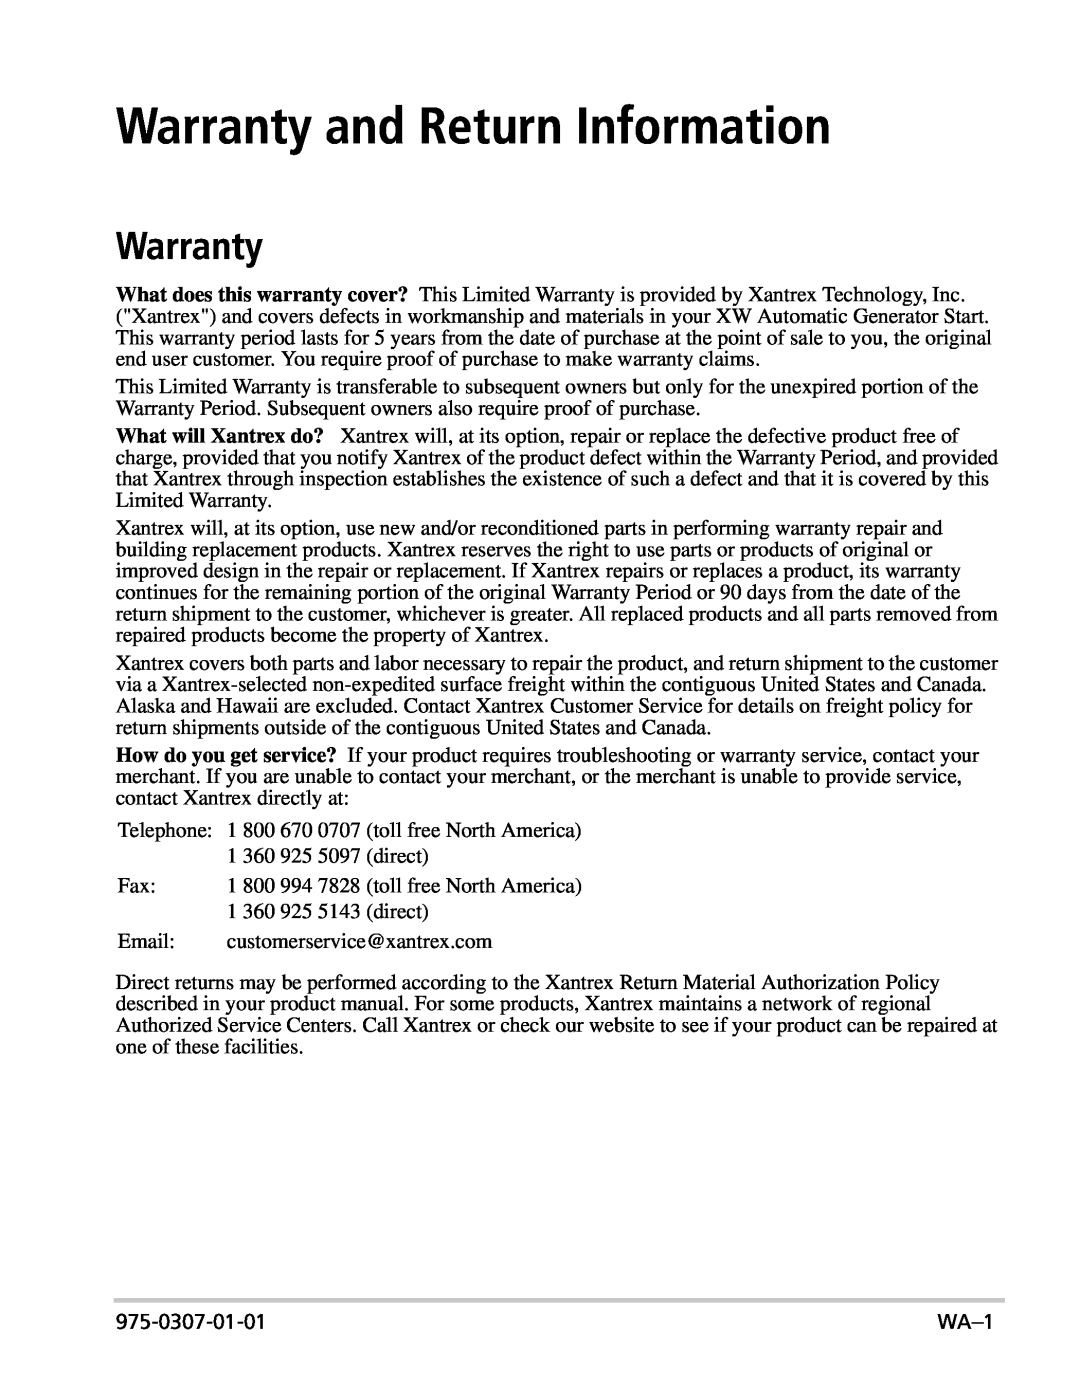 Xantrex Technology XW manual Warranty and Return Information 